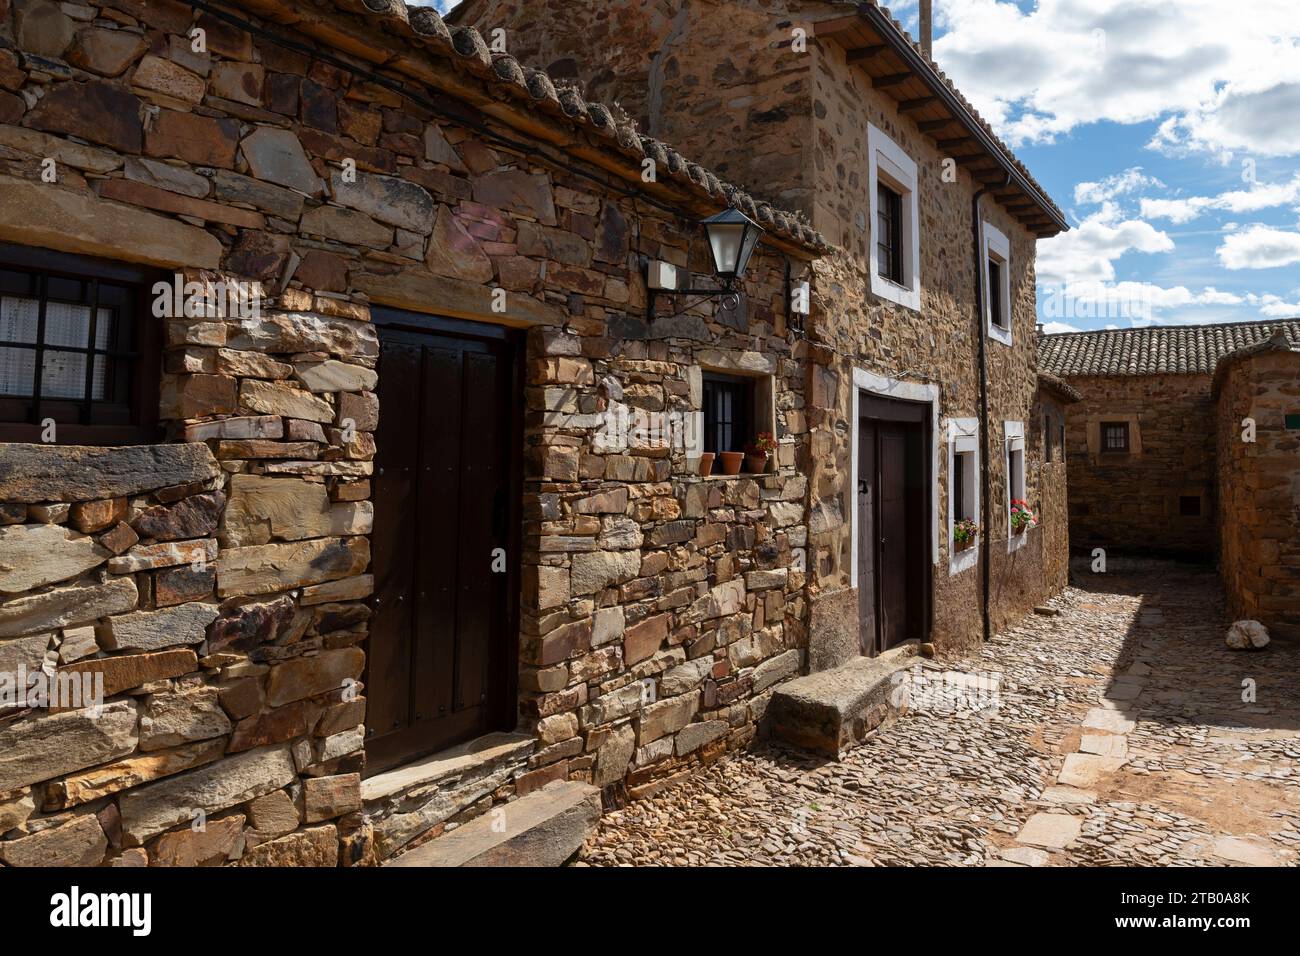 Traditional homes on Calle de las Chinchillas in the Maragato village of Castrillo de los Polvazares along the Camino Frances in Leon, Spain. This anc Stock Photo